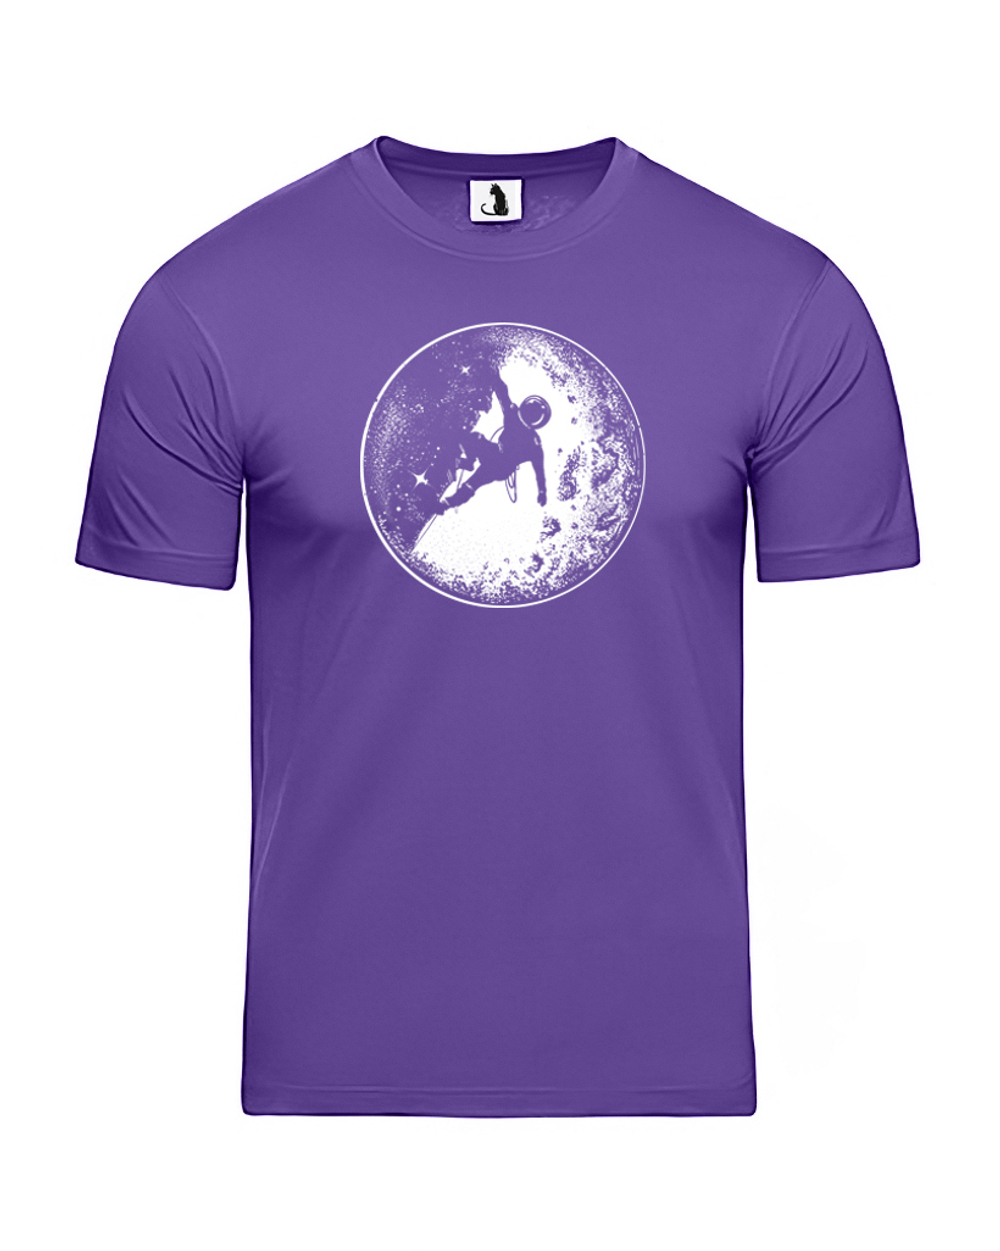 Футболка Космонавт на Луне unisex фиолетовая с белым рисунком